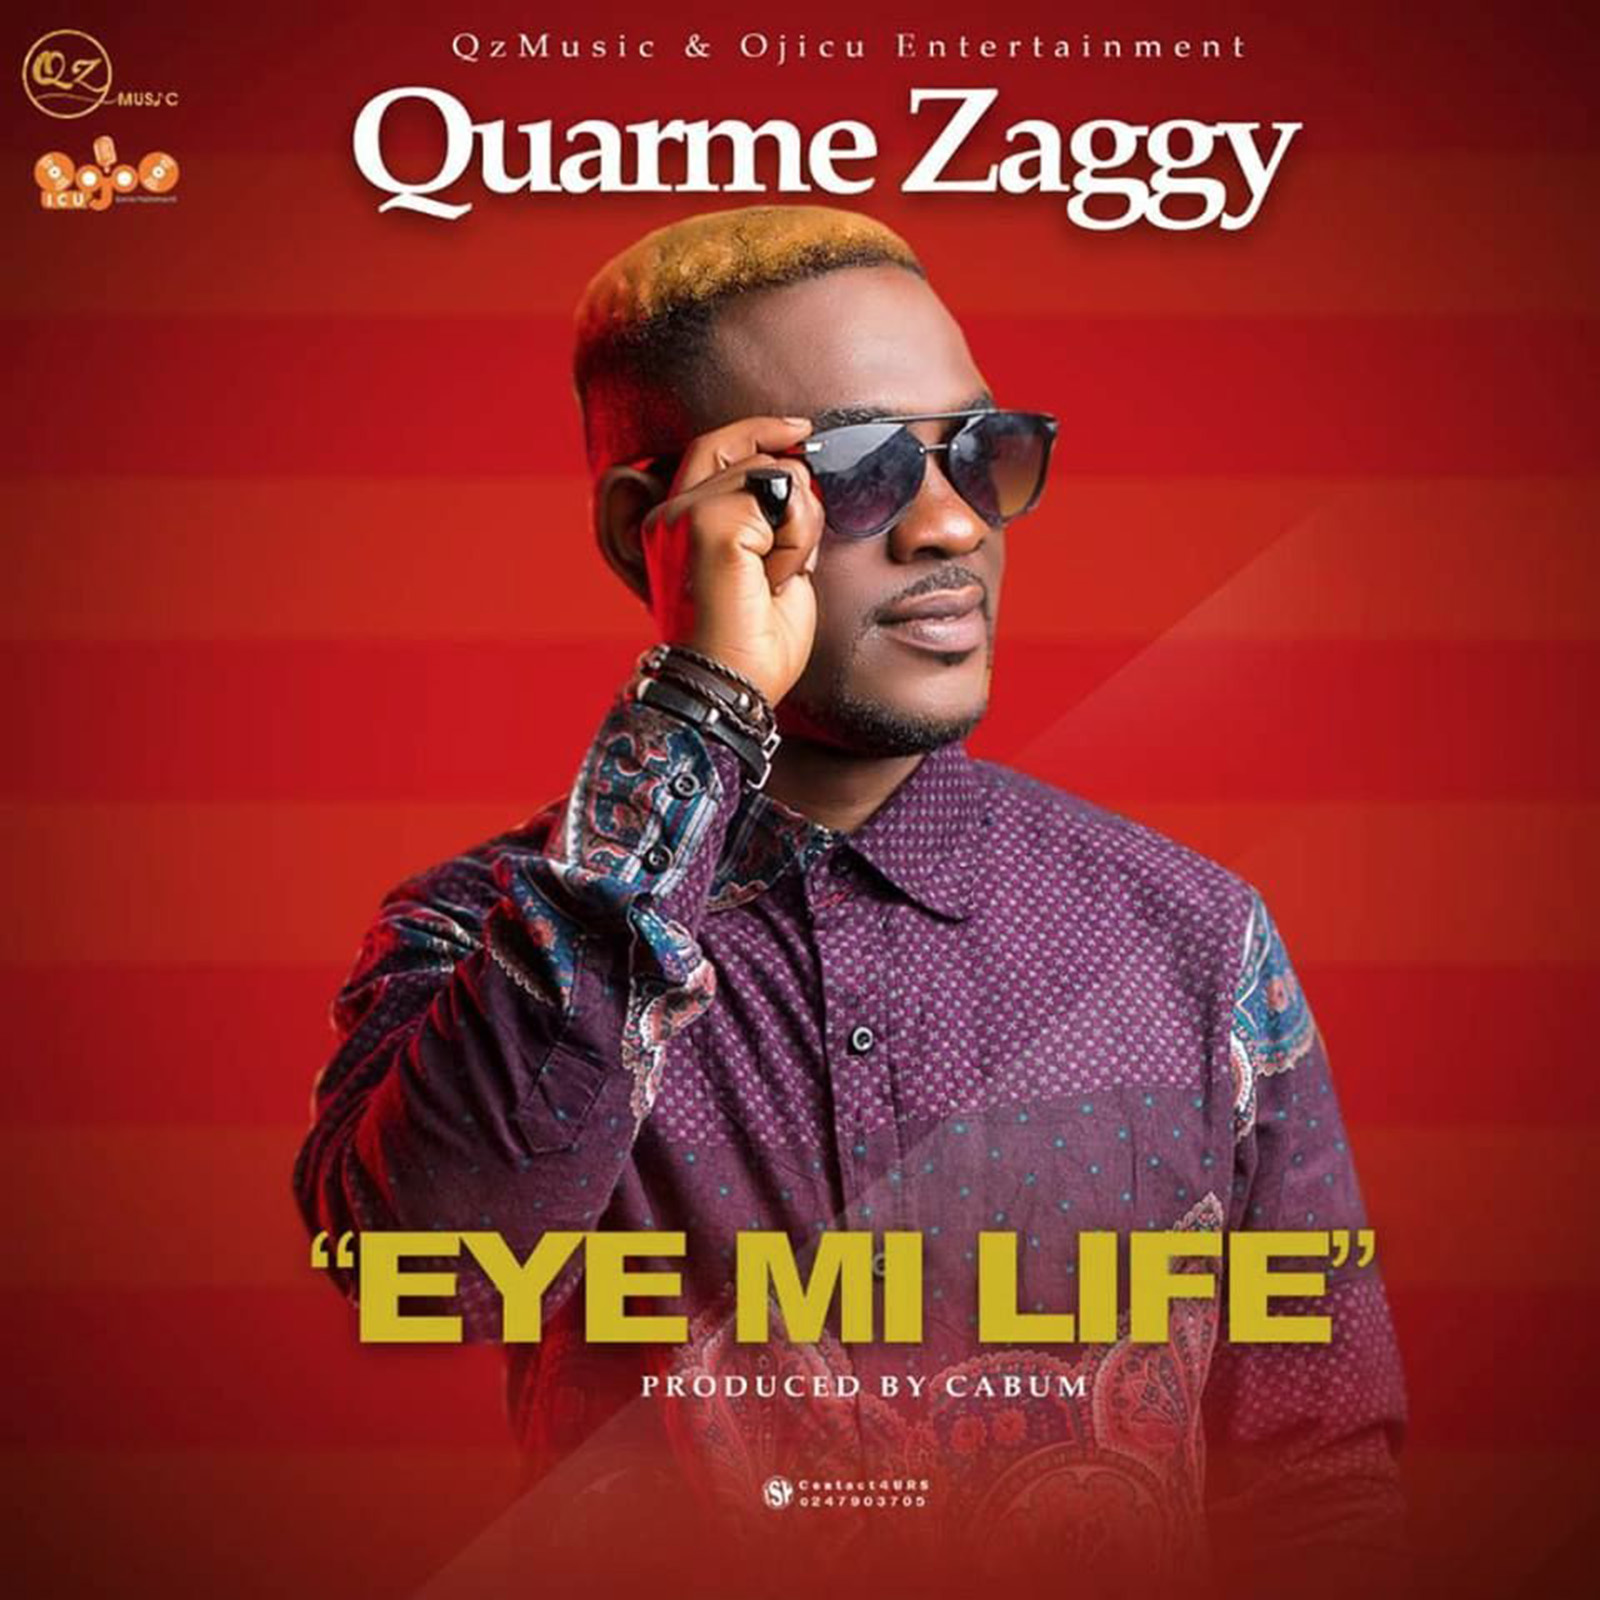 Eye Mi Life by Quarme Zaggy